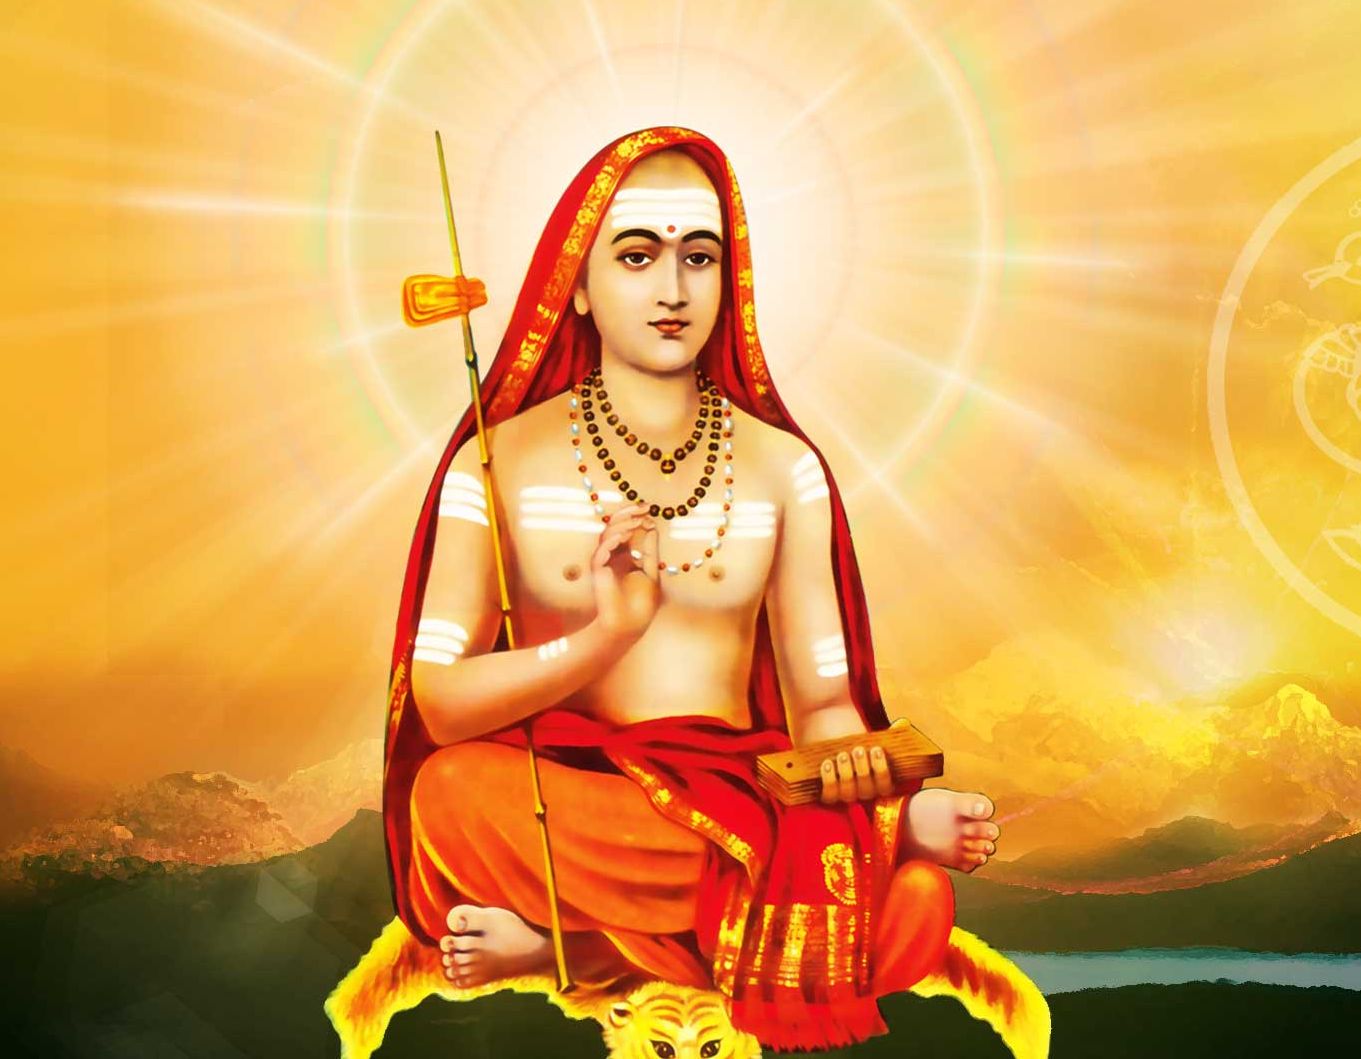 Adi Shankara Jayanti 2021: Shankaracharya Jayanti Image, Photo, Quotes and Greetings Free Download